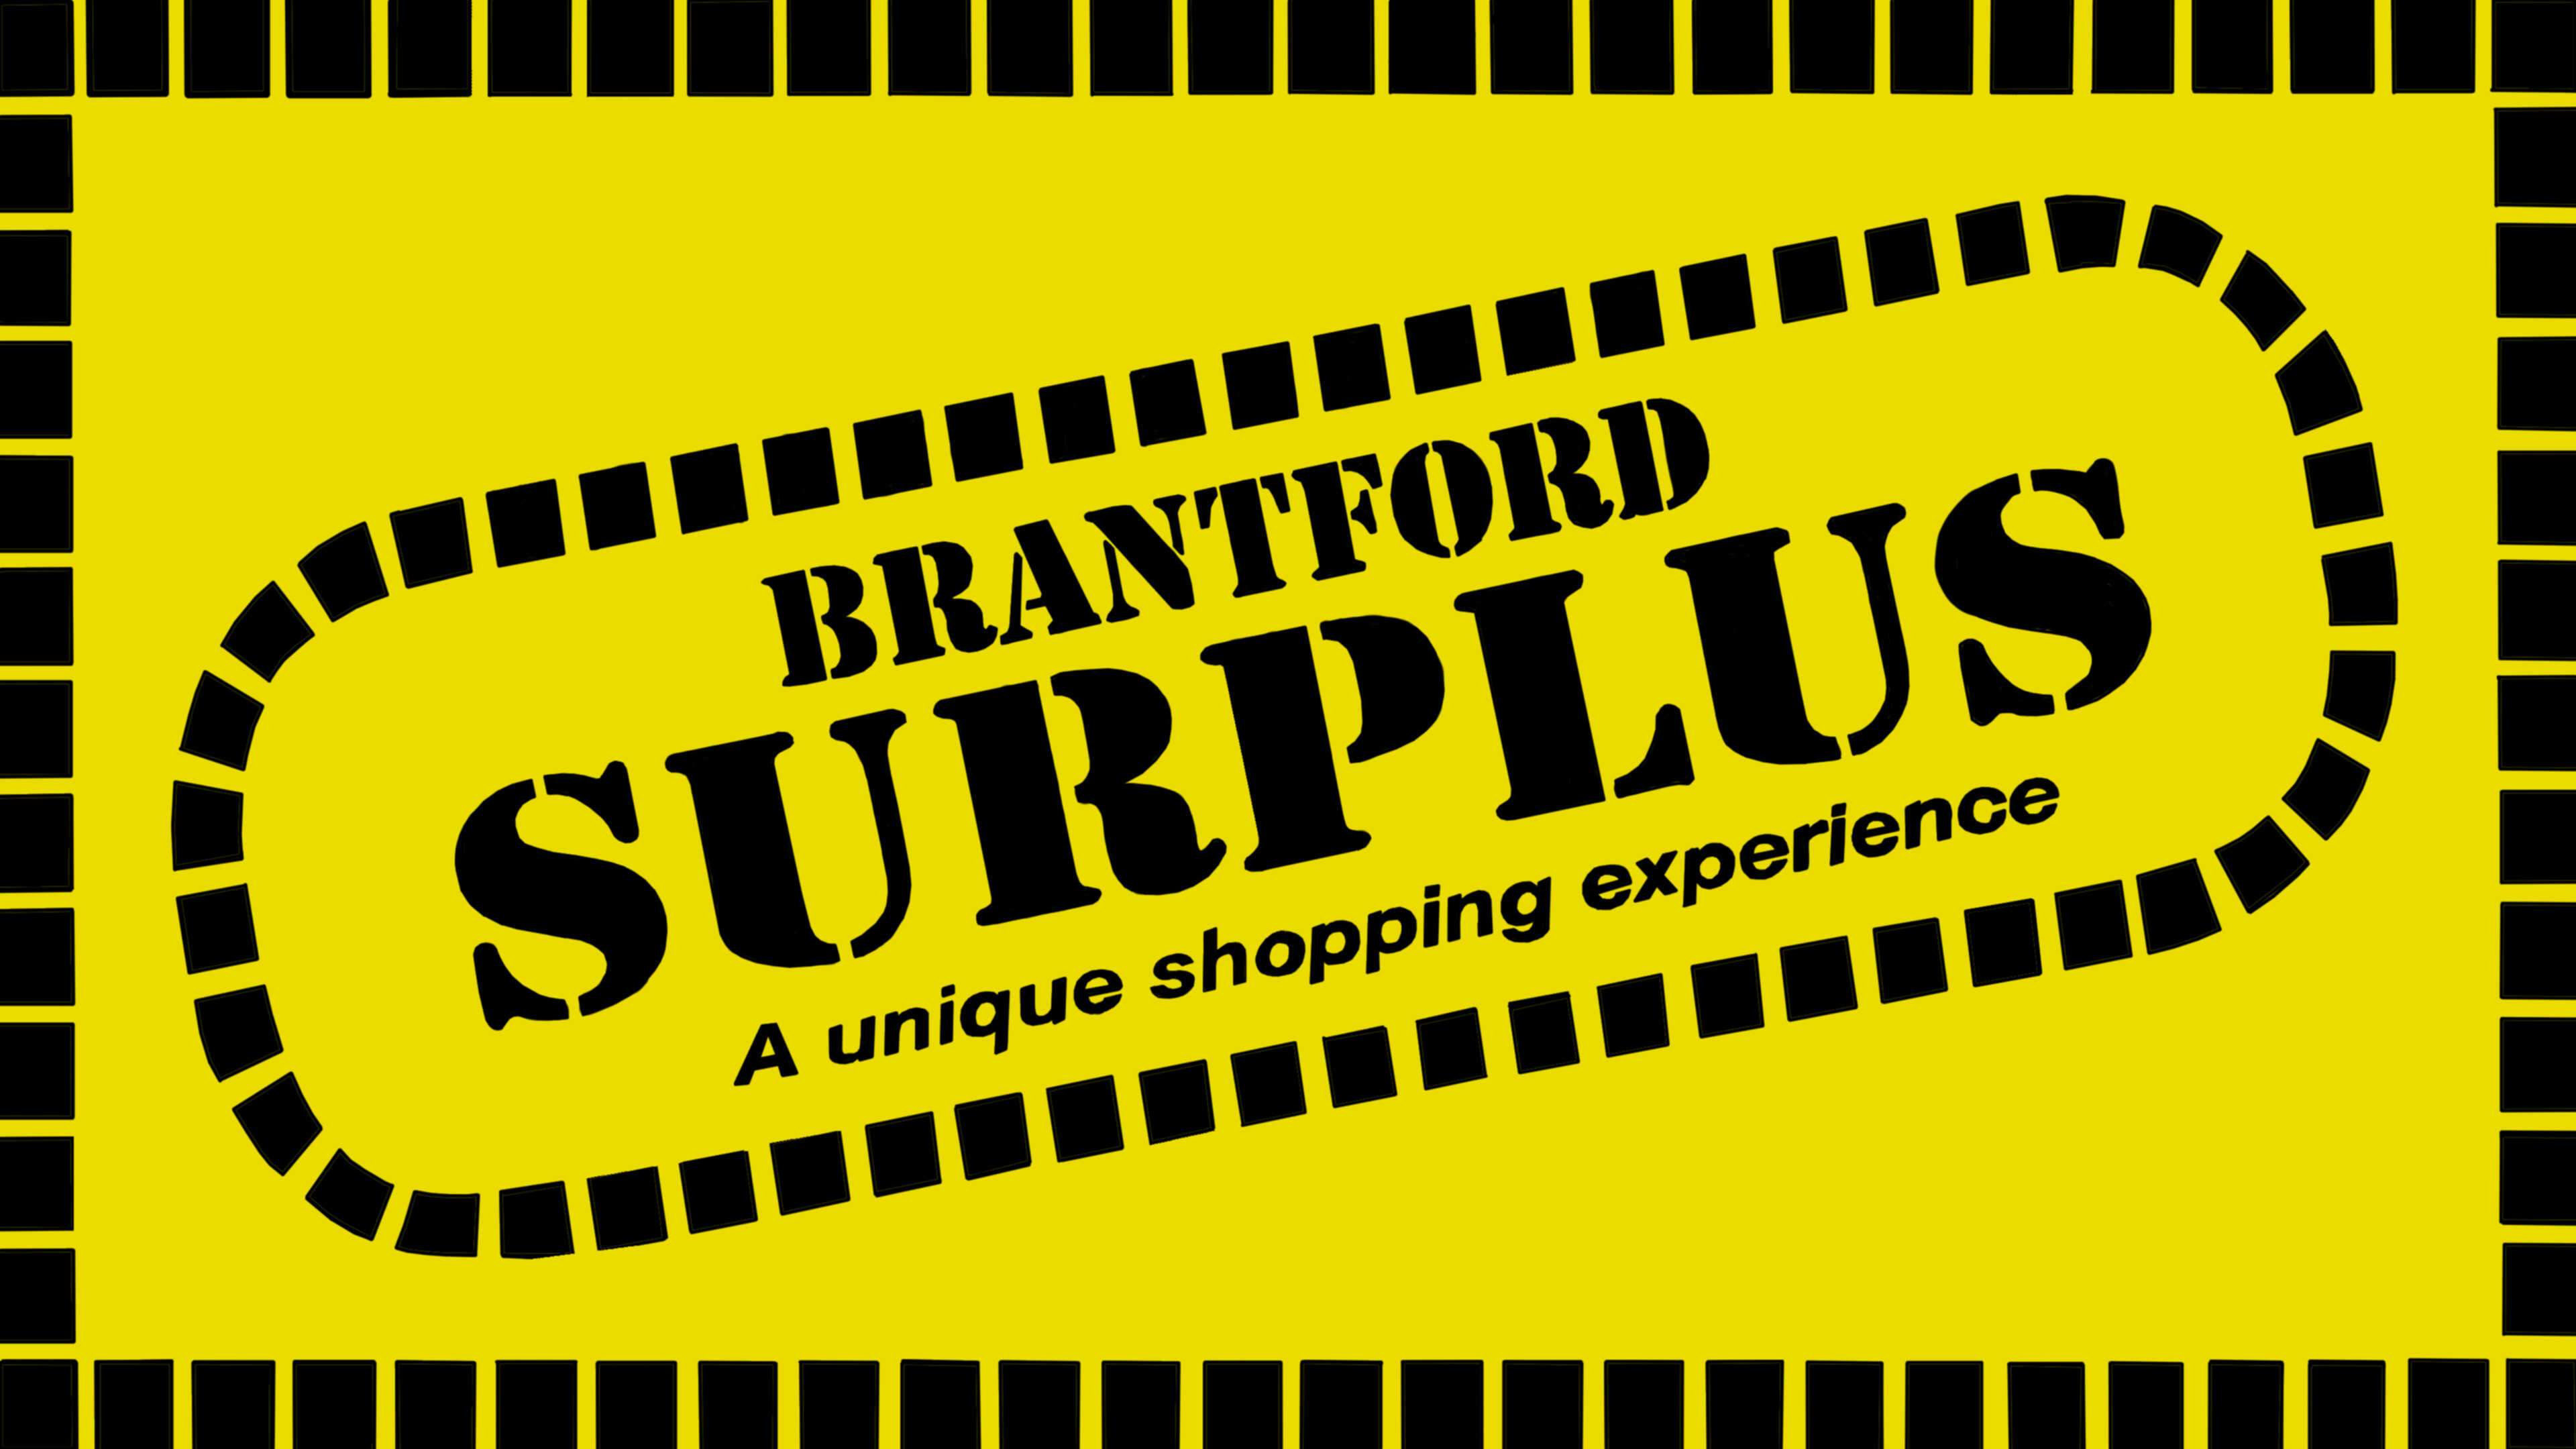 Brantford Surplus